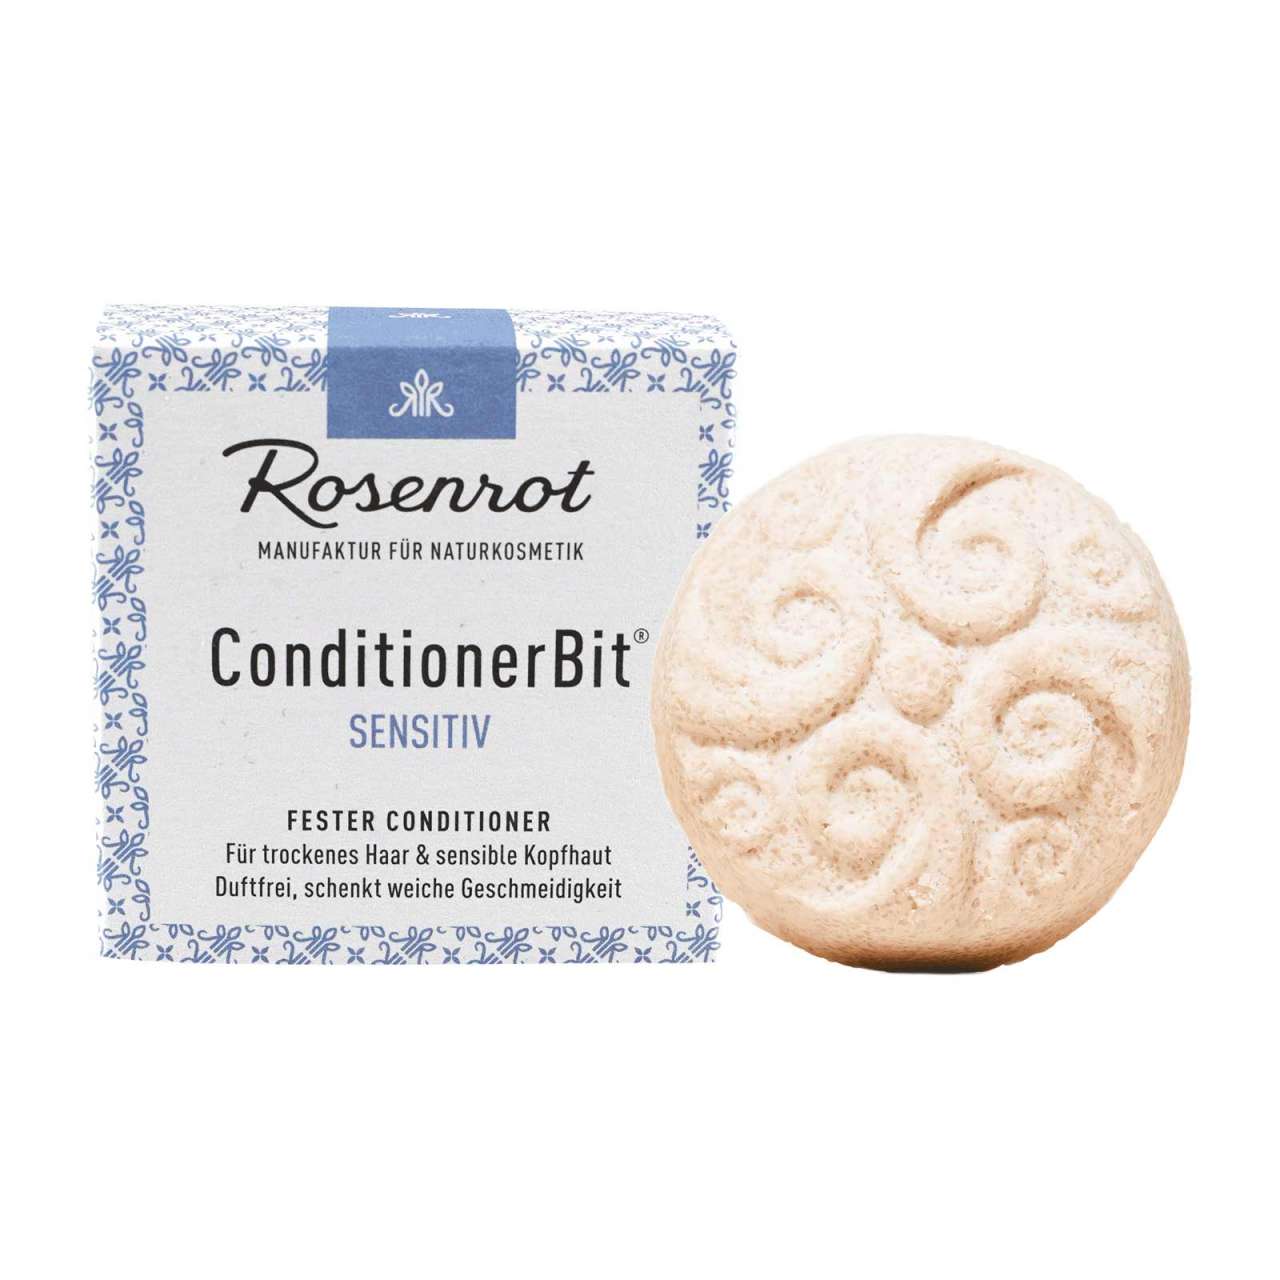 Rosenrot Fester Conditioner Naturkosmetik - sensitiv, duftfrei